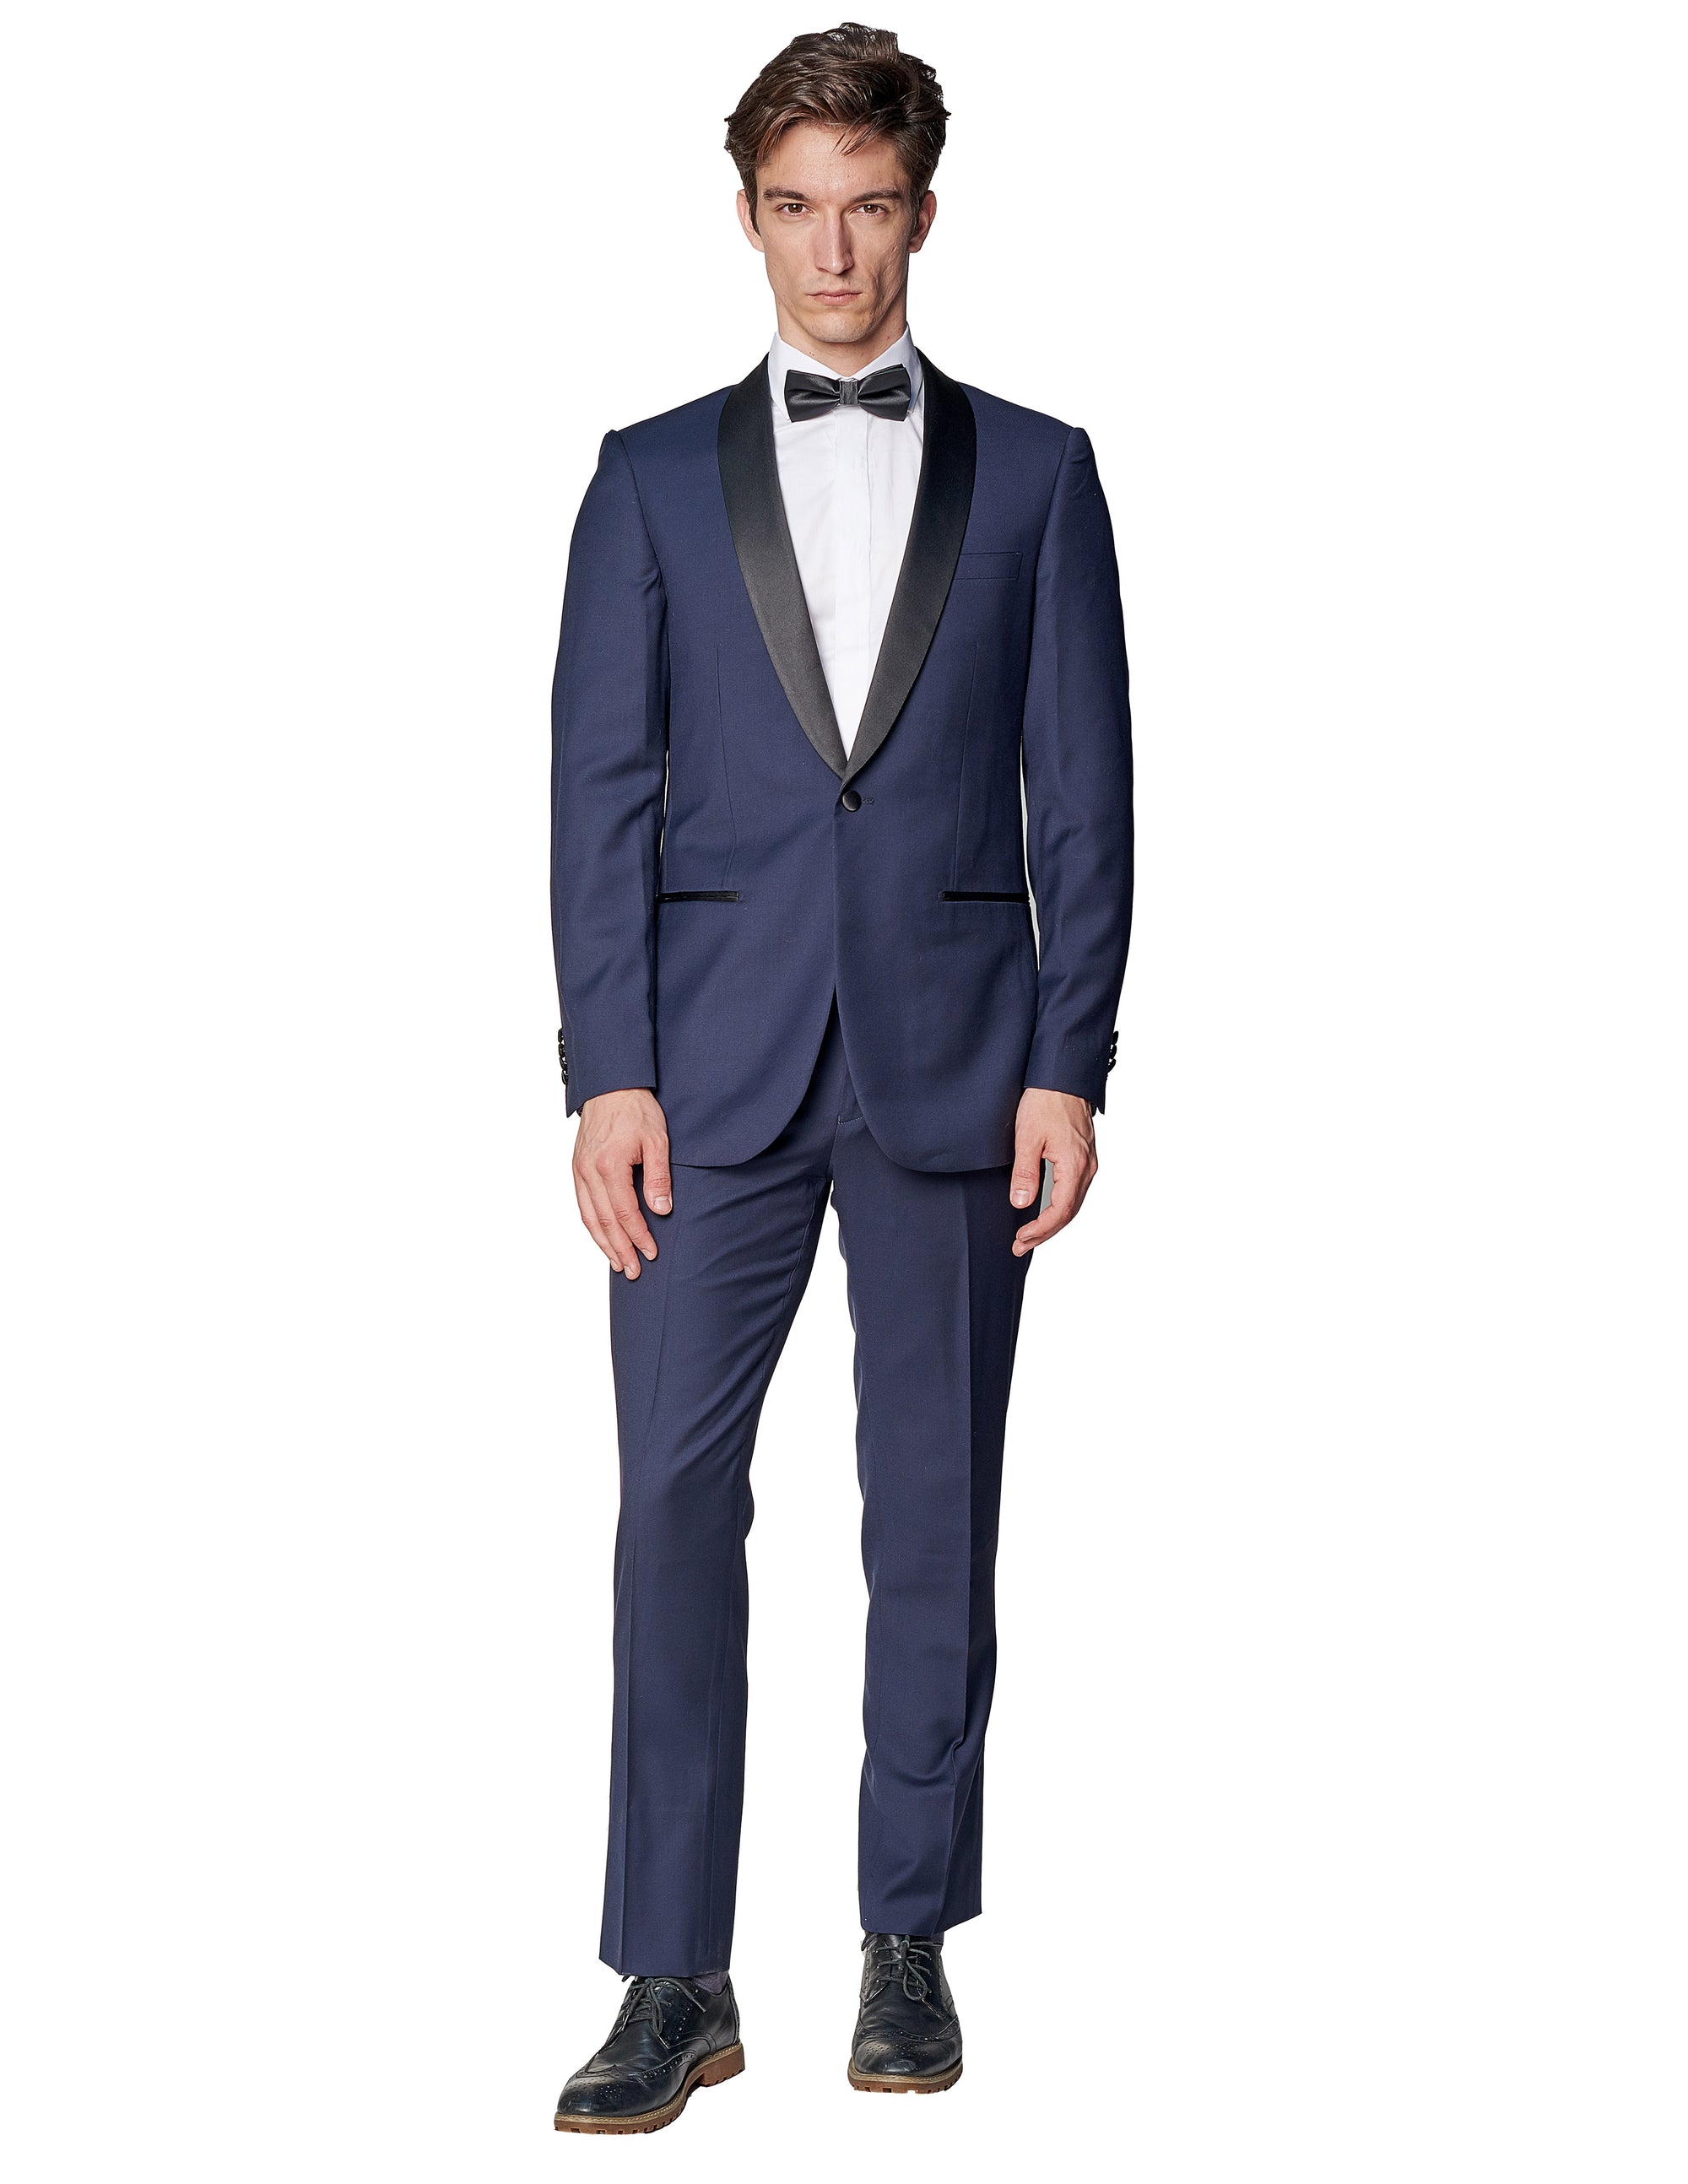 Navy Shawl Lapel Wool Tuxedo-The Suit Spot-Wedding Suits-Wedding Tuxedos-Groomsmen Suits-Groomsmen Tuxedos-Slim Fit Suits-Slim Fit Tuxedos-Online wedding suits